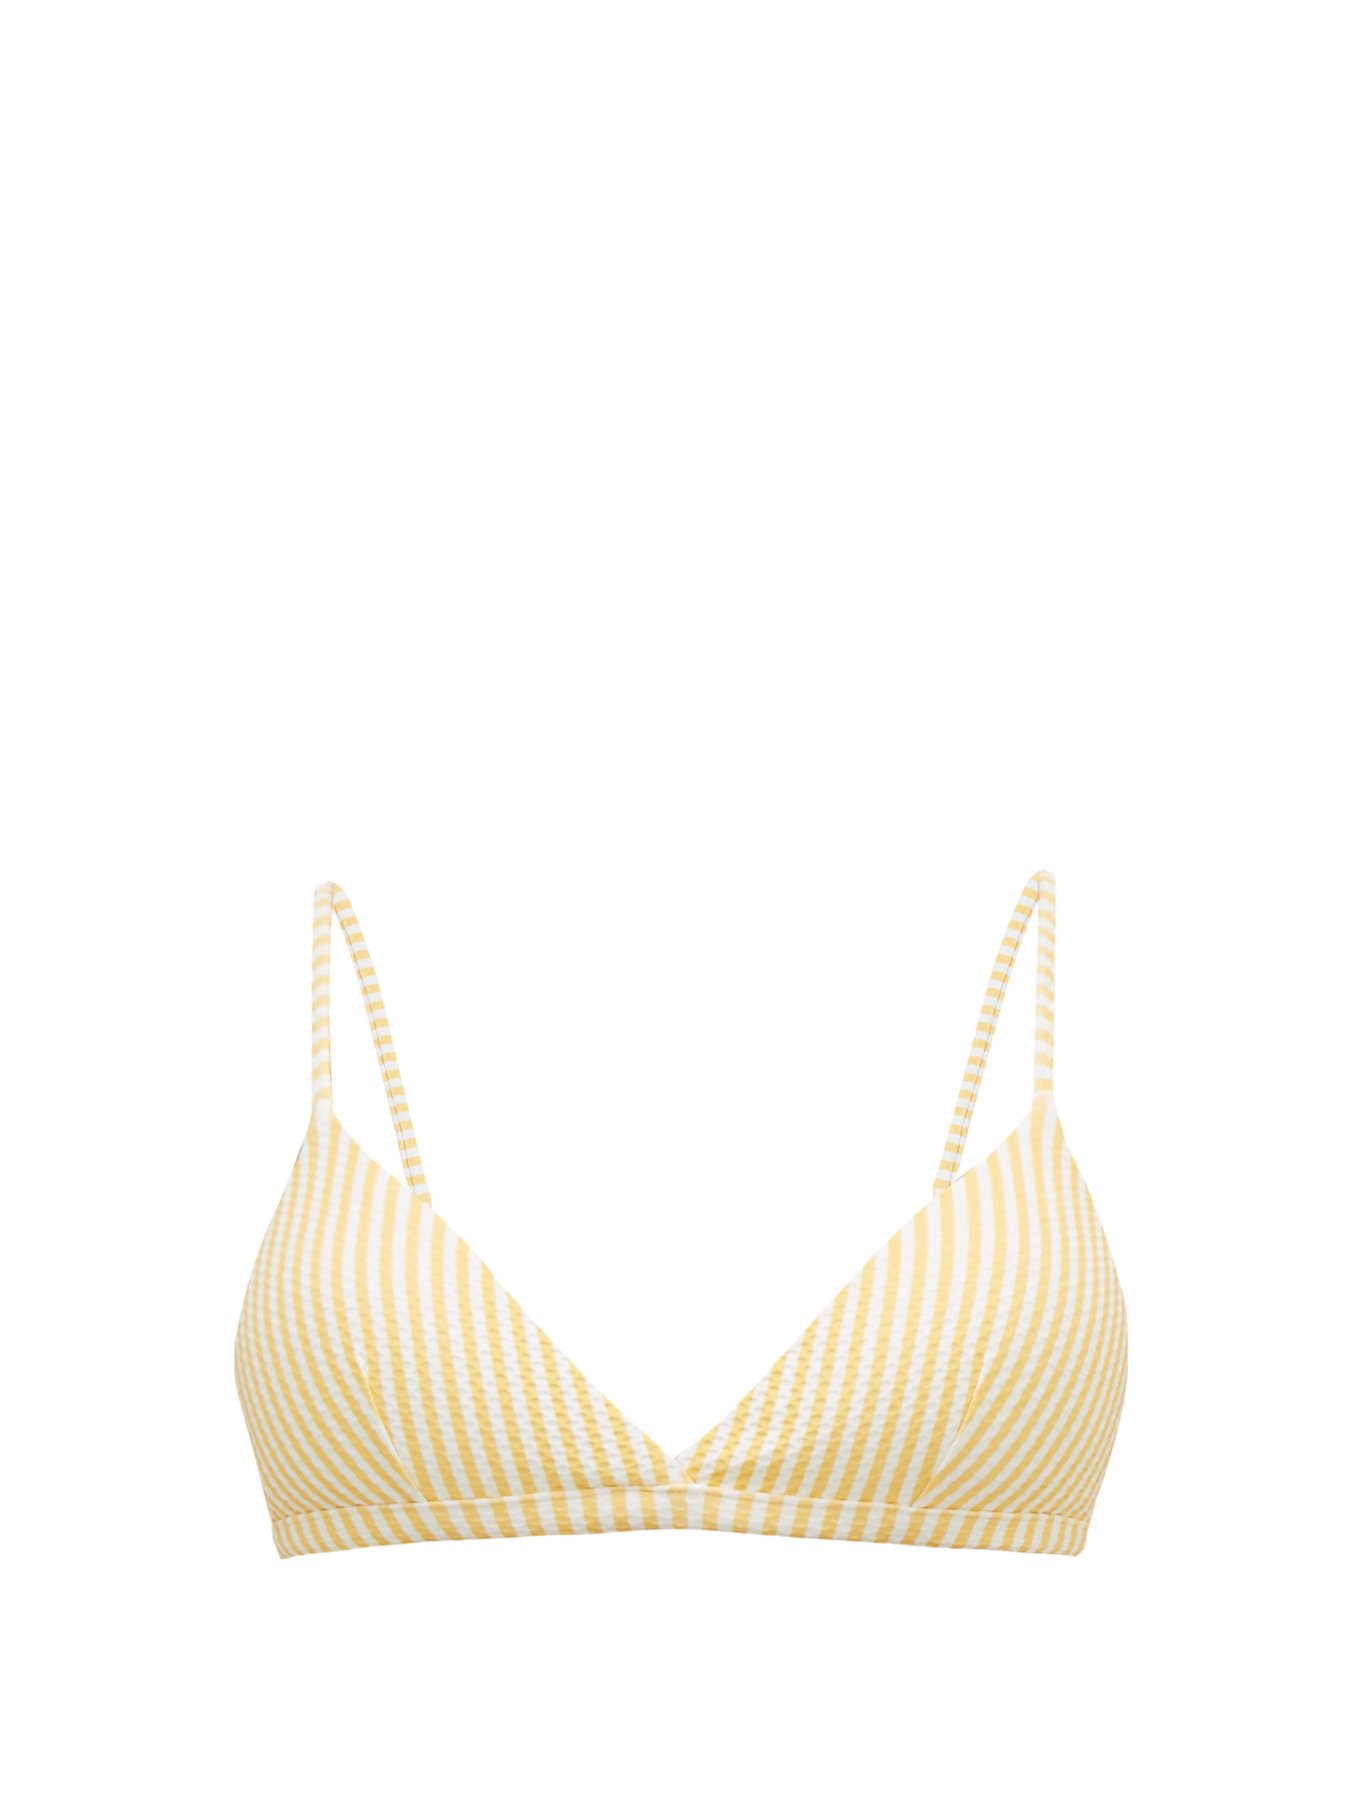 yellow and white striped bikini top